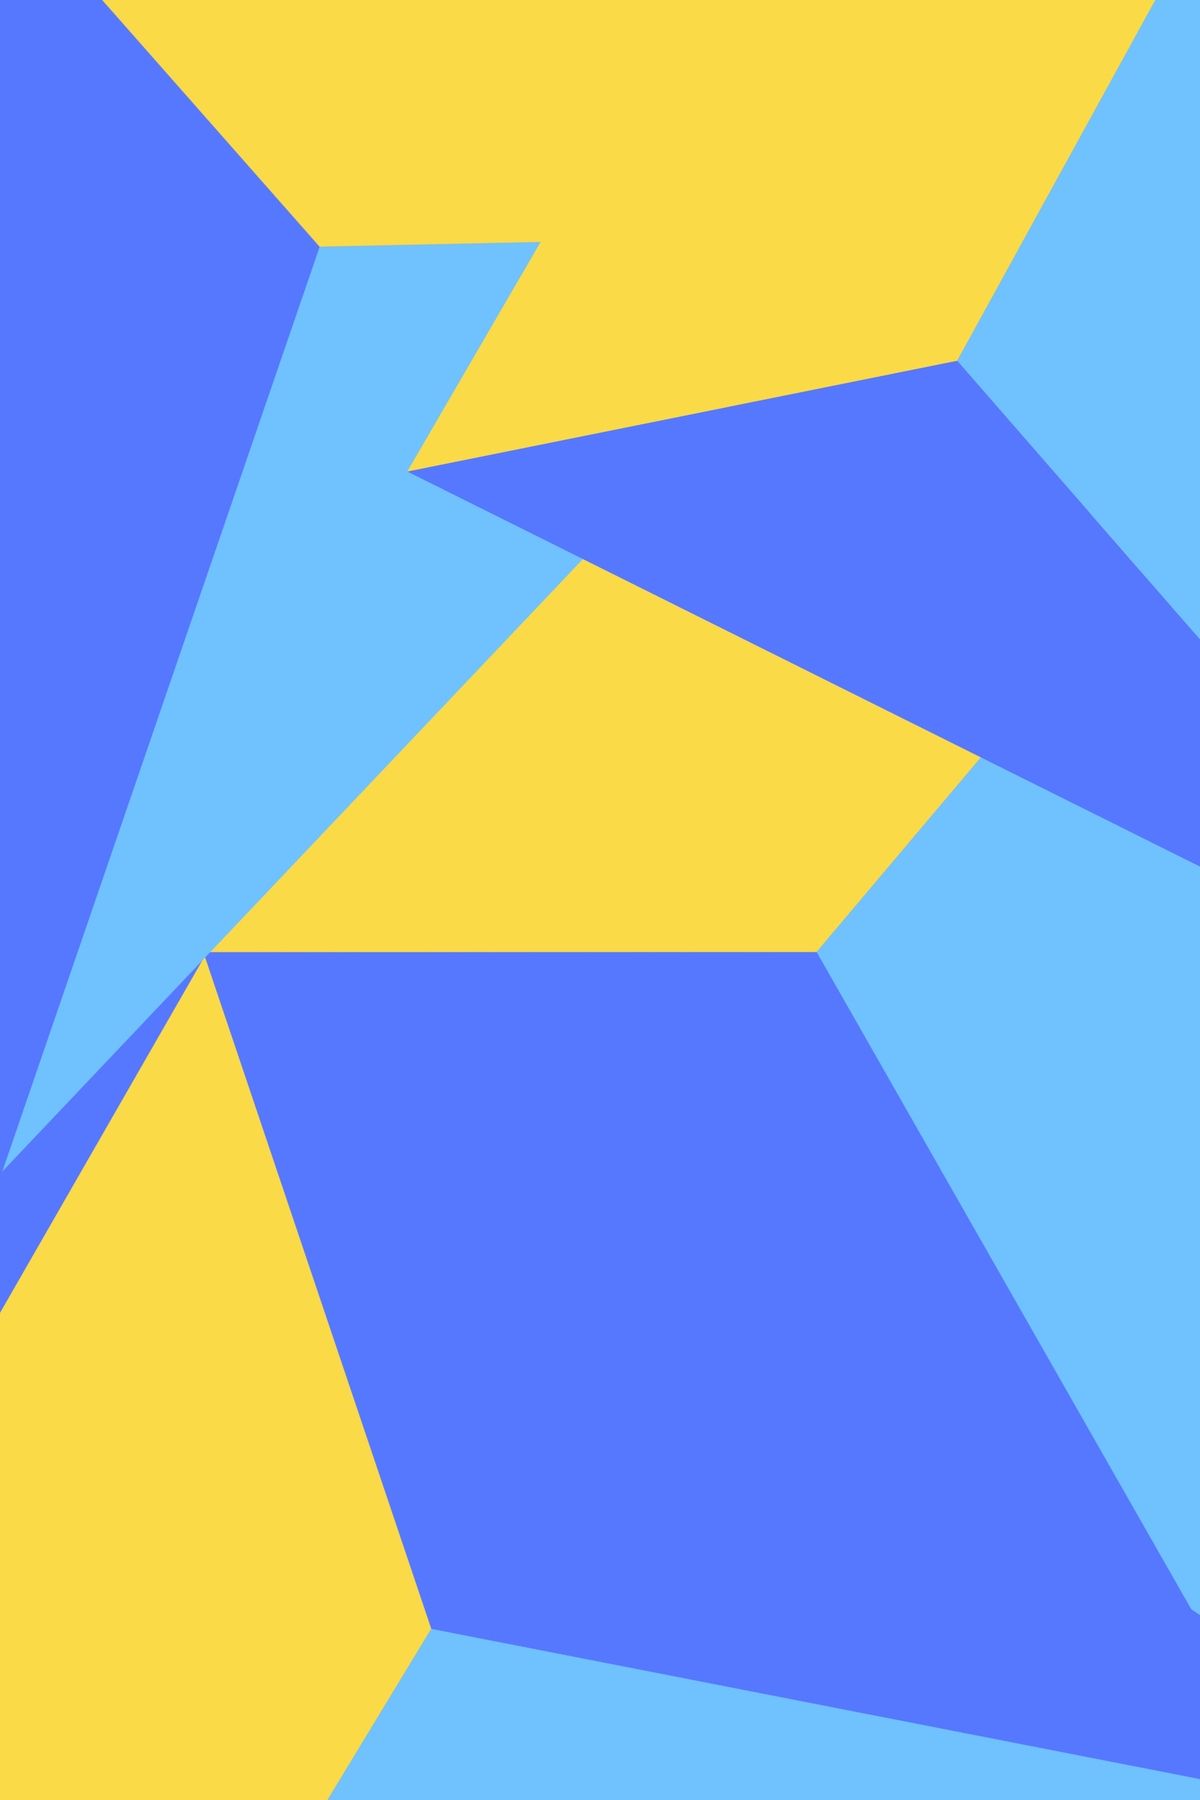 geometric shapes wallpaper blue